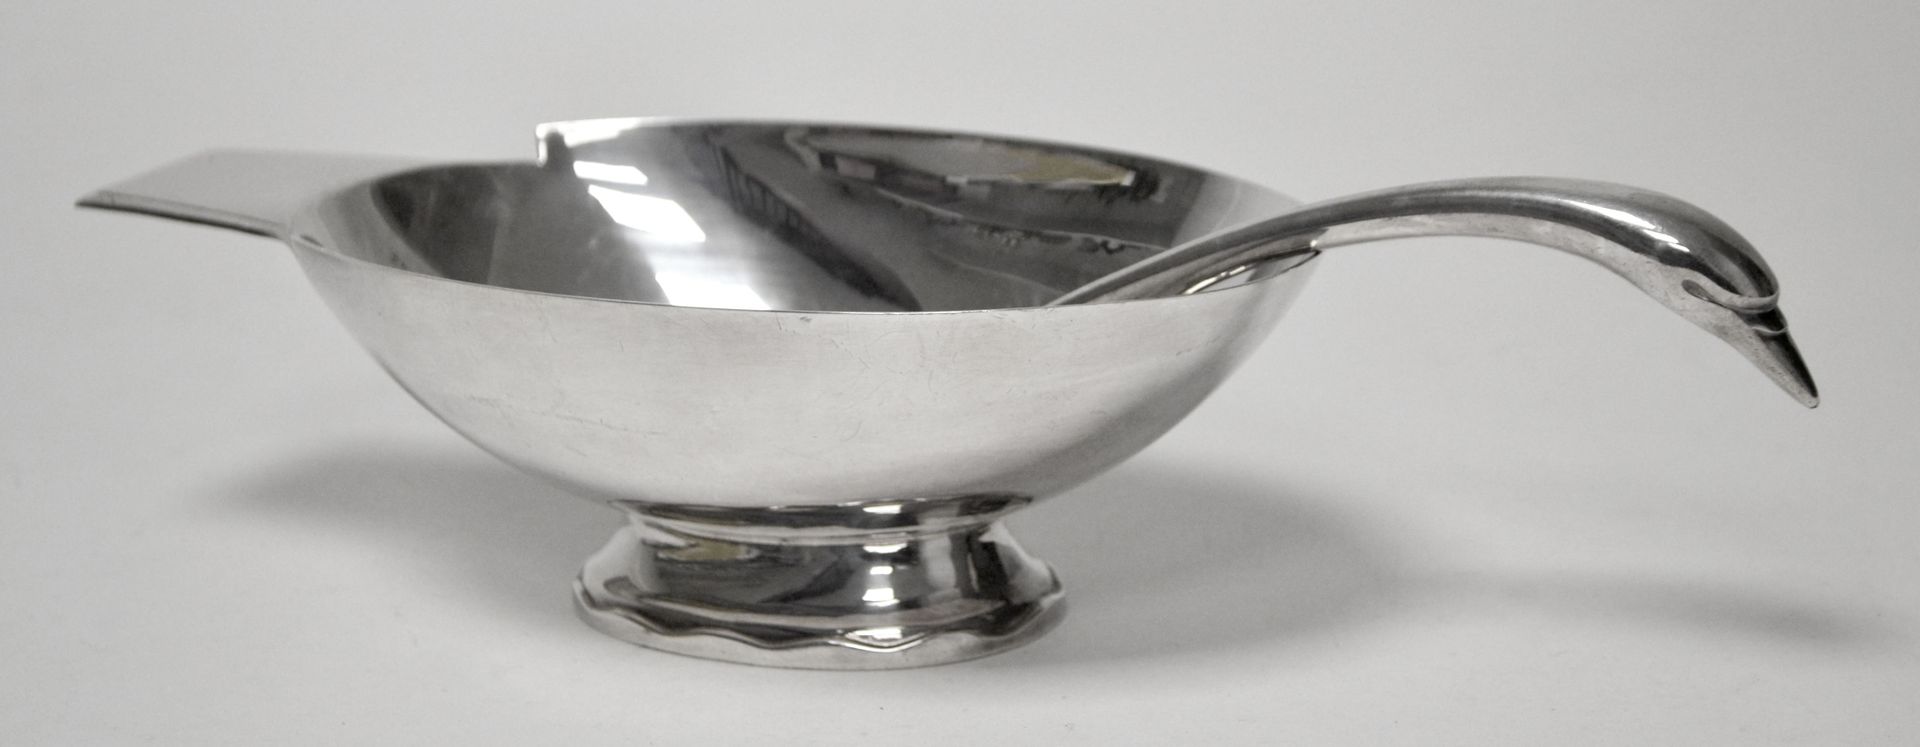 Null Christian FJERDINGSTAD代表GALLIA。镀银金属茶杯，天鹅模型，勺子形成天鹅的颈部和头部，茶杯的底部装饰着波浪。长：26.5厘米